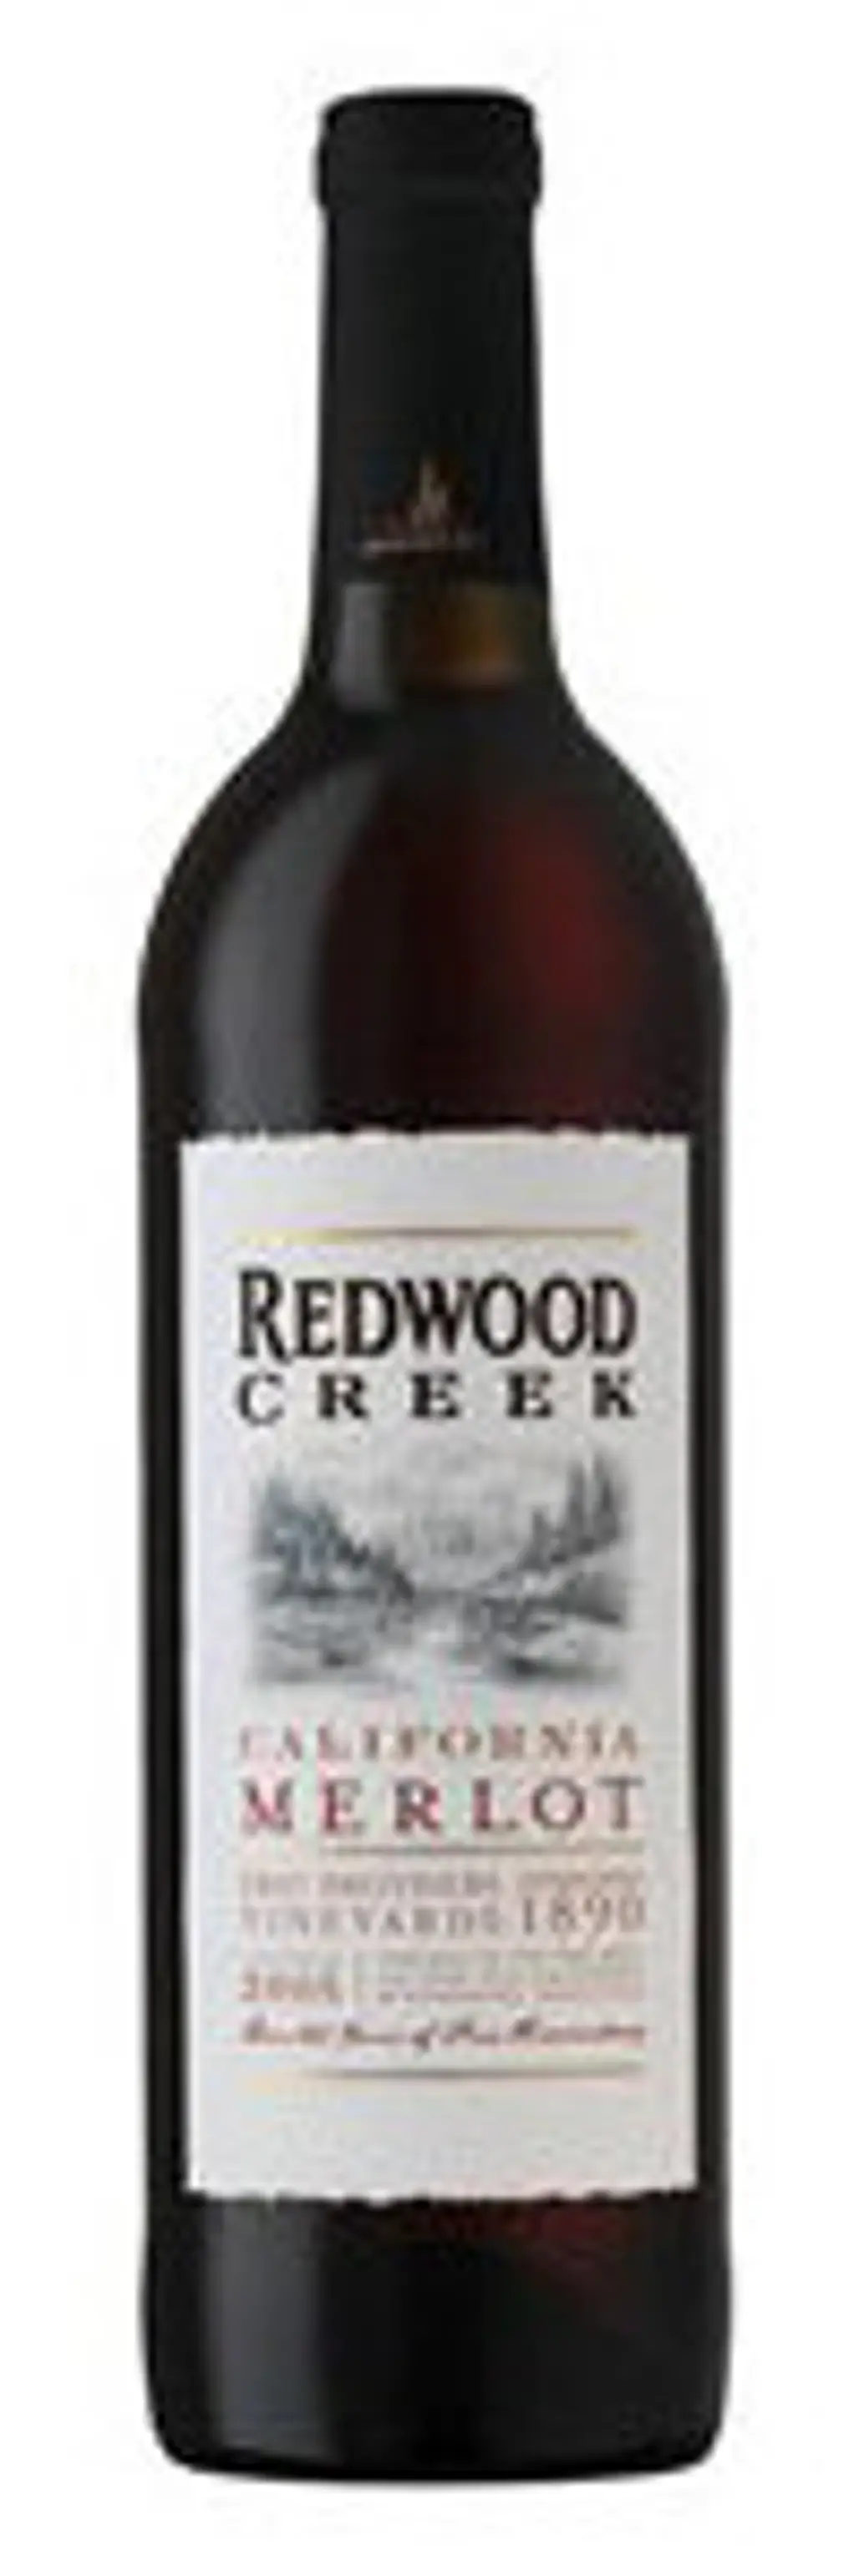 Redwood Creek Merlot